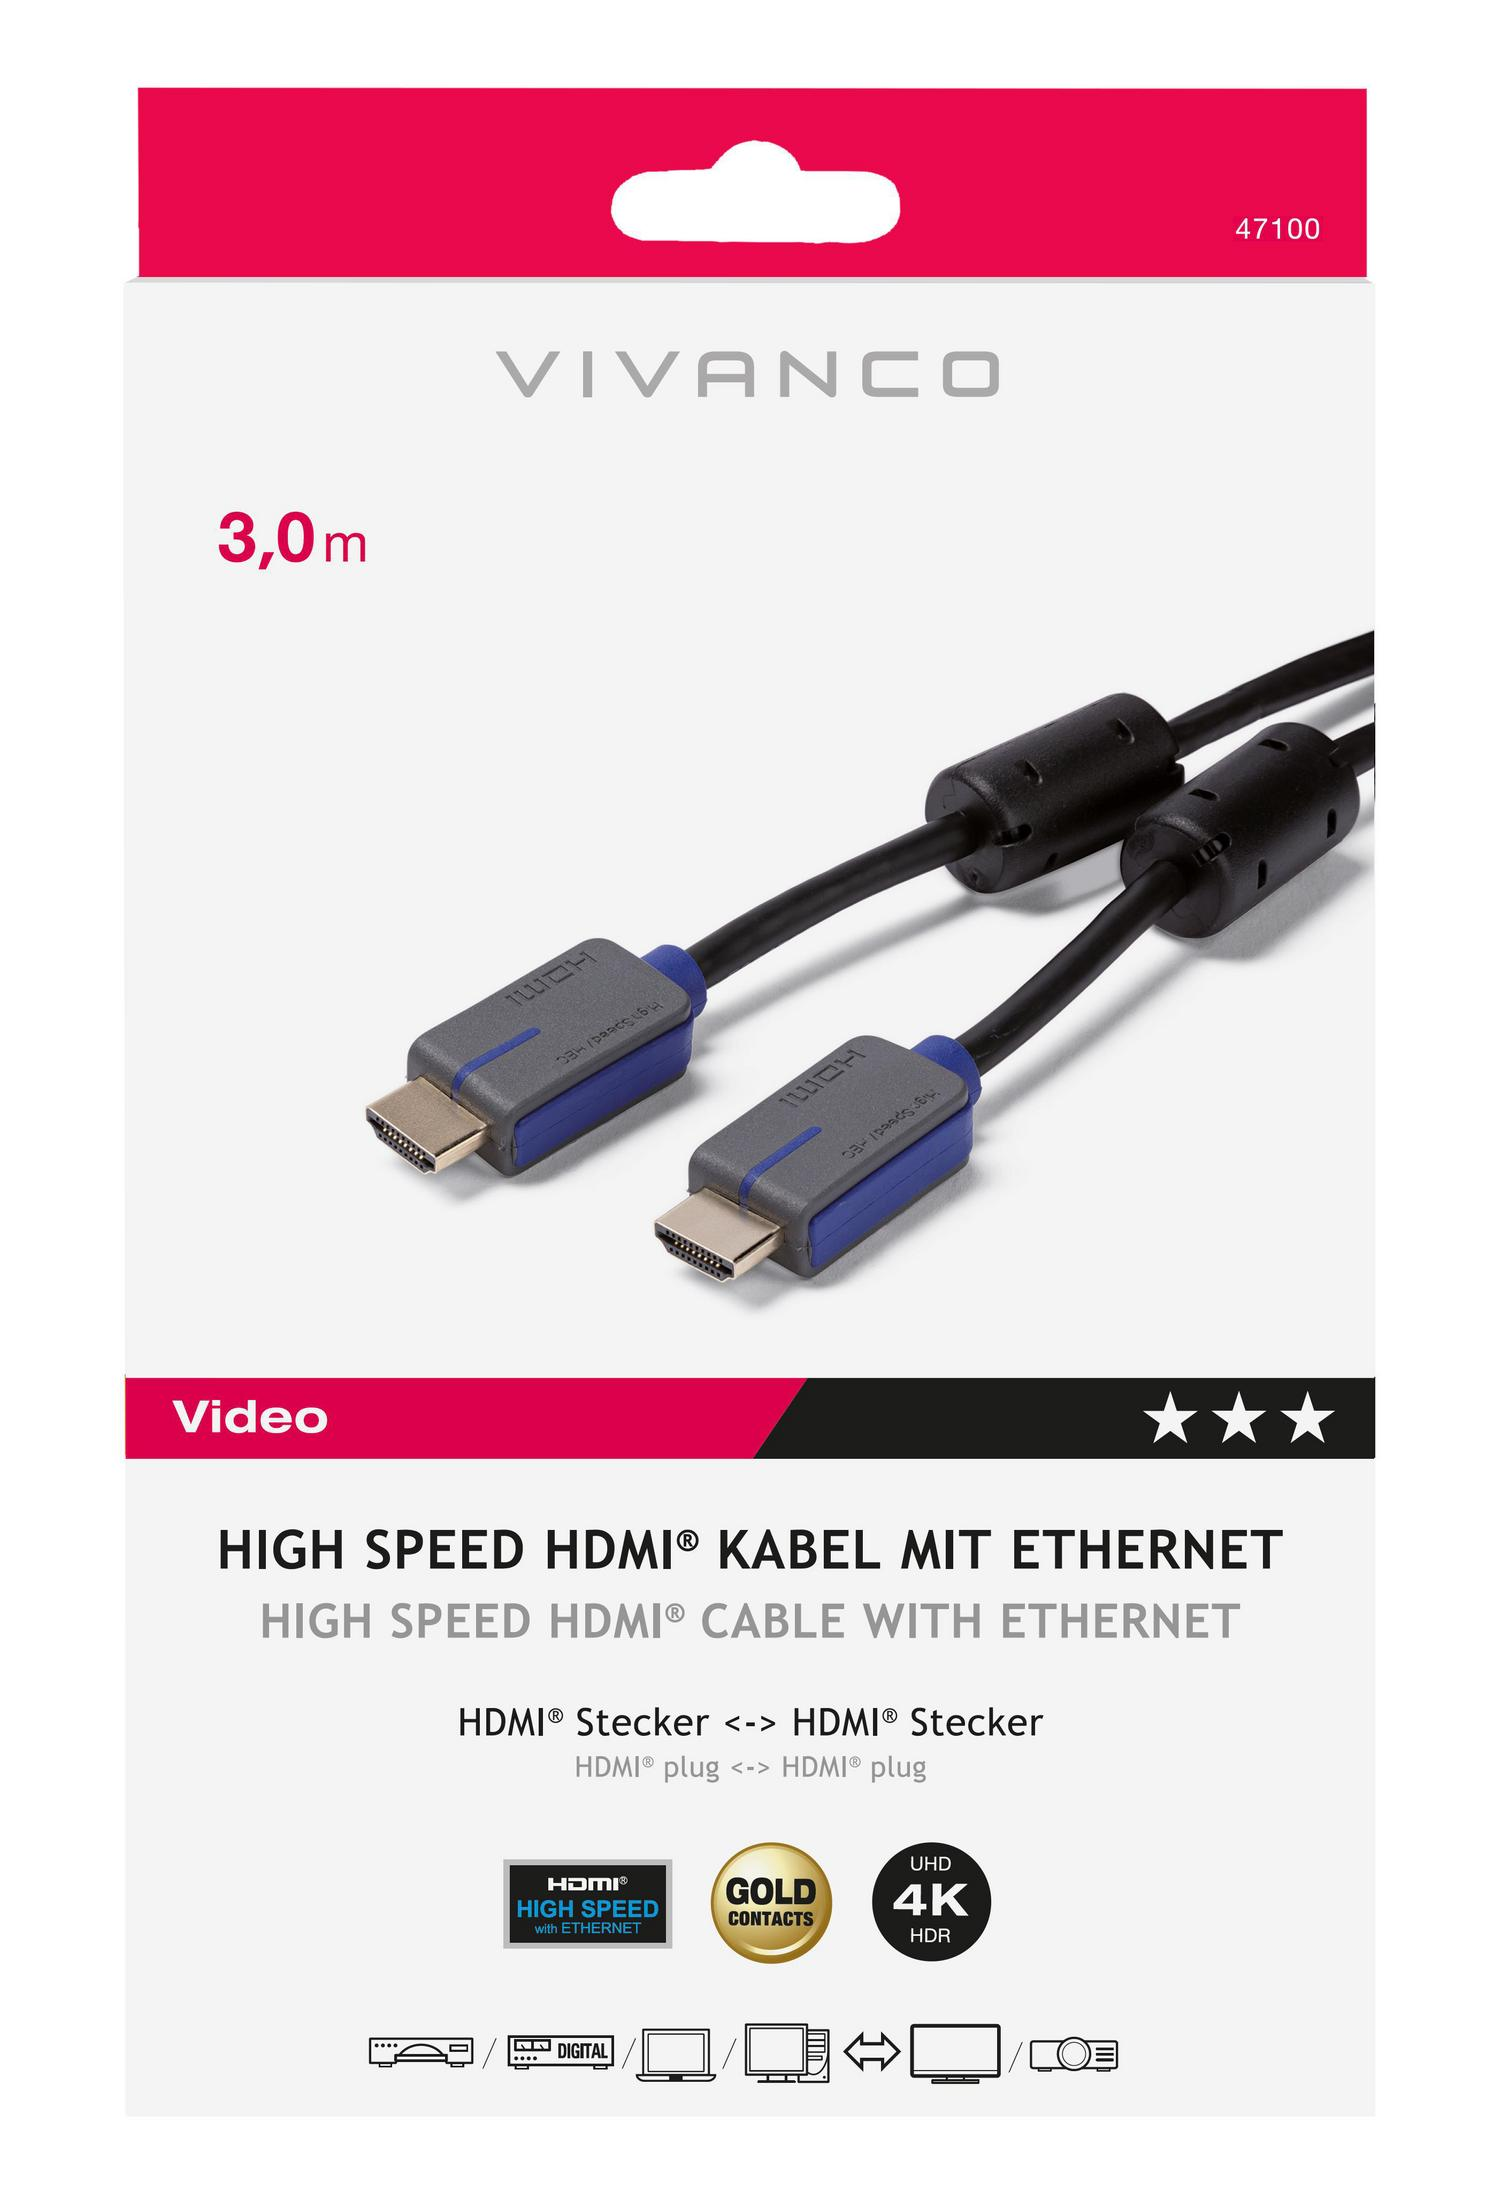 47100 HDMI VIVANCO Kabel